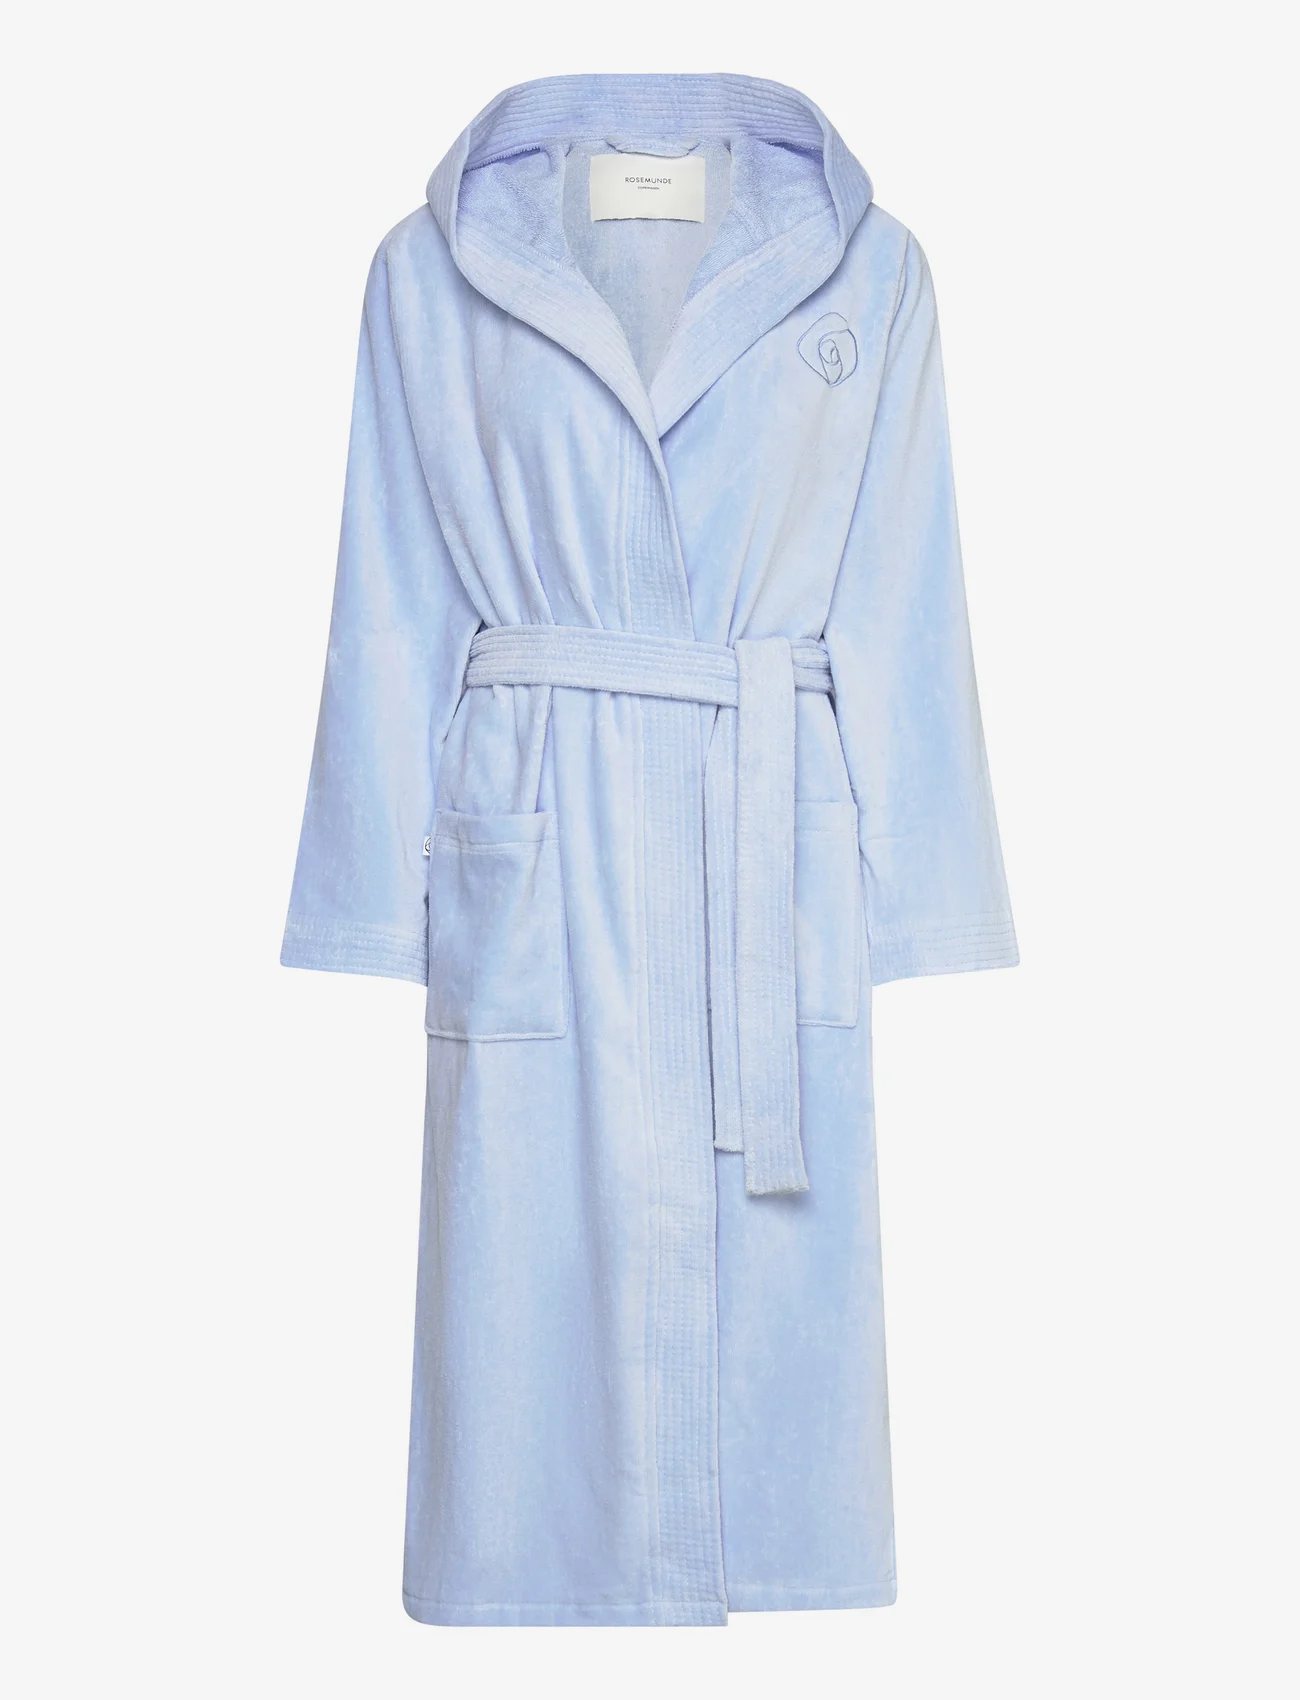 Rosemunde - Organic robe - birthday gifts - serenity blue - 0